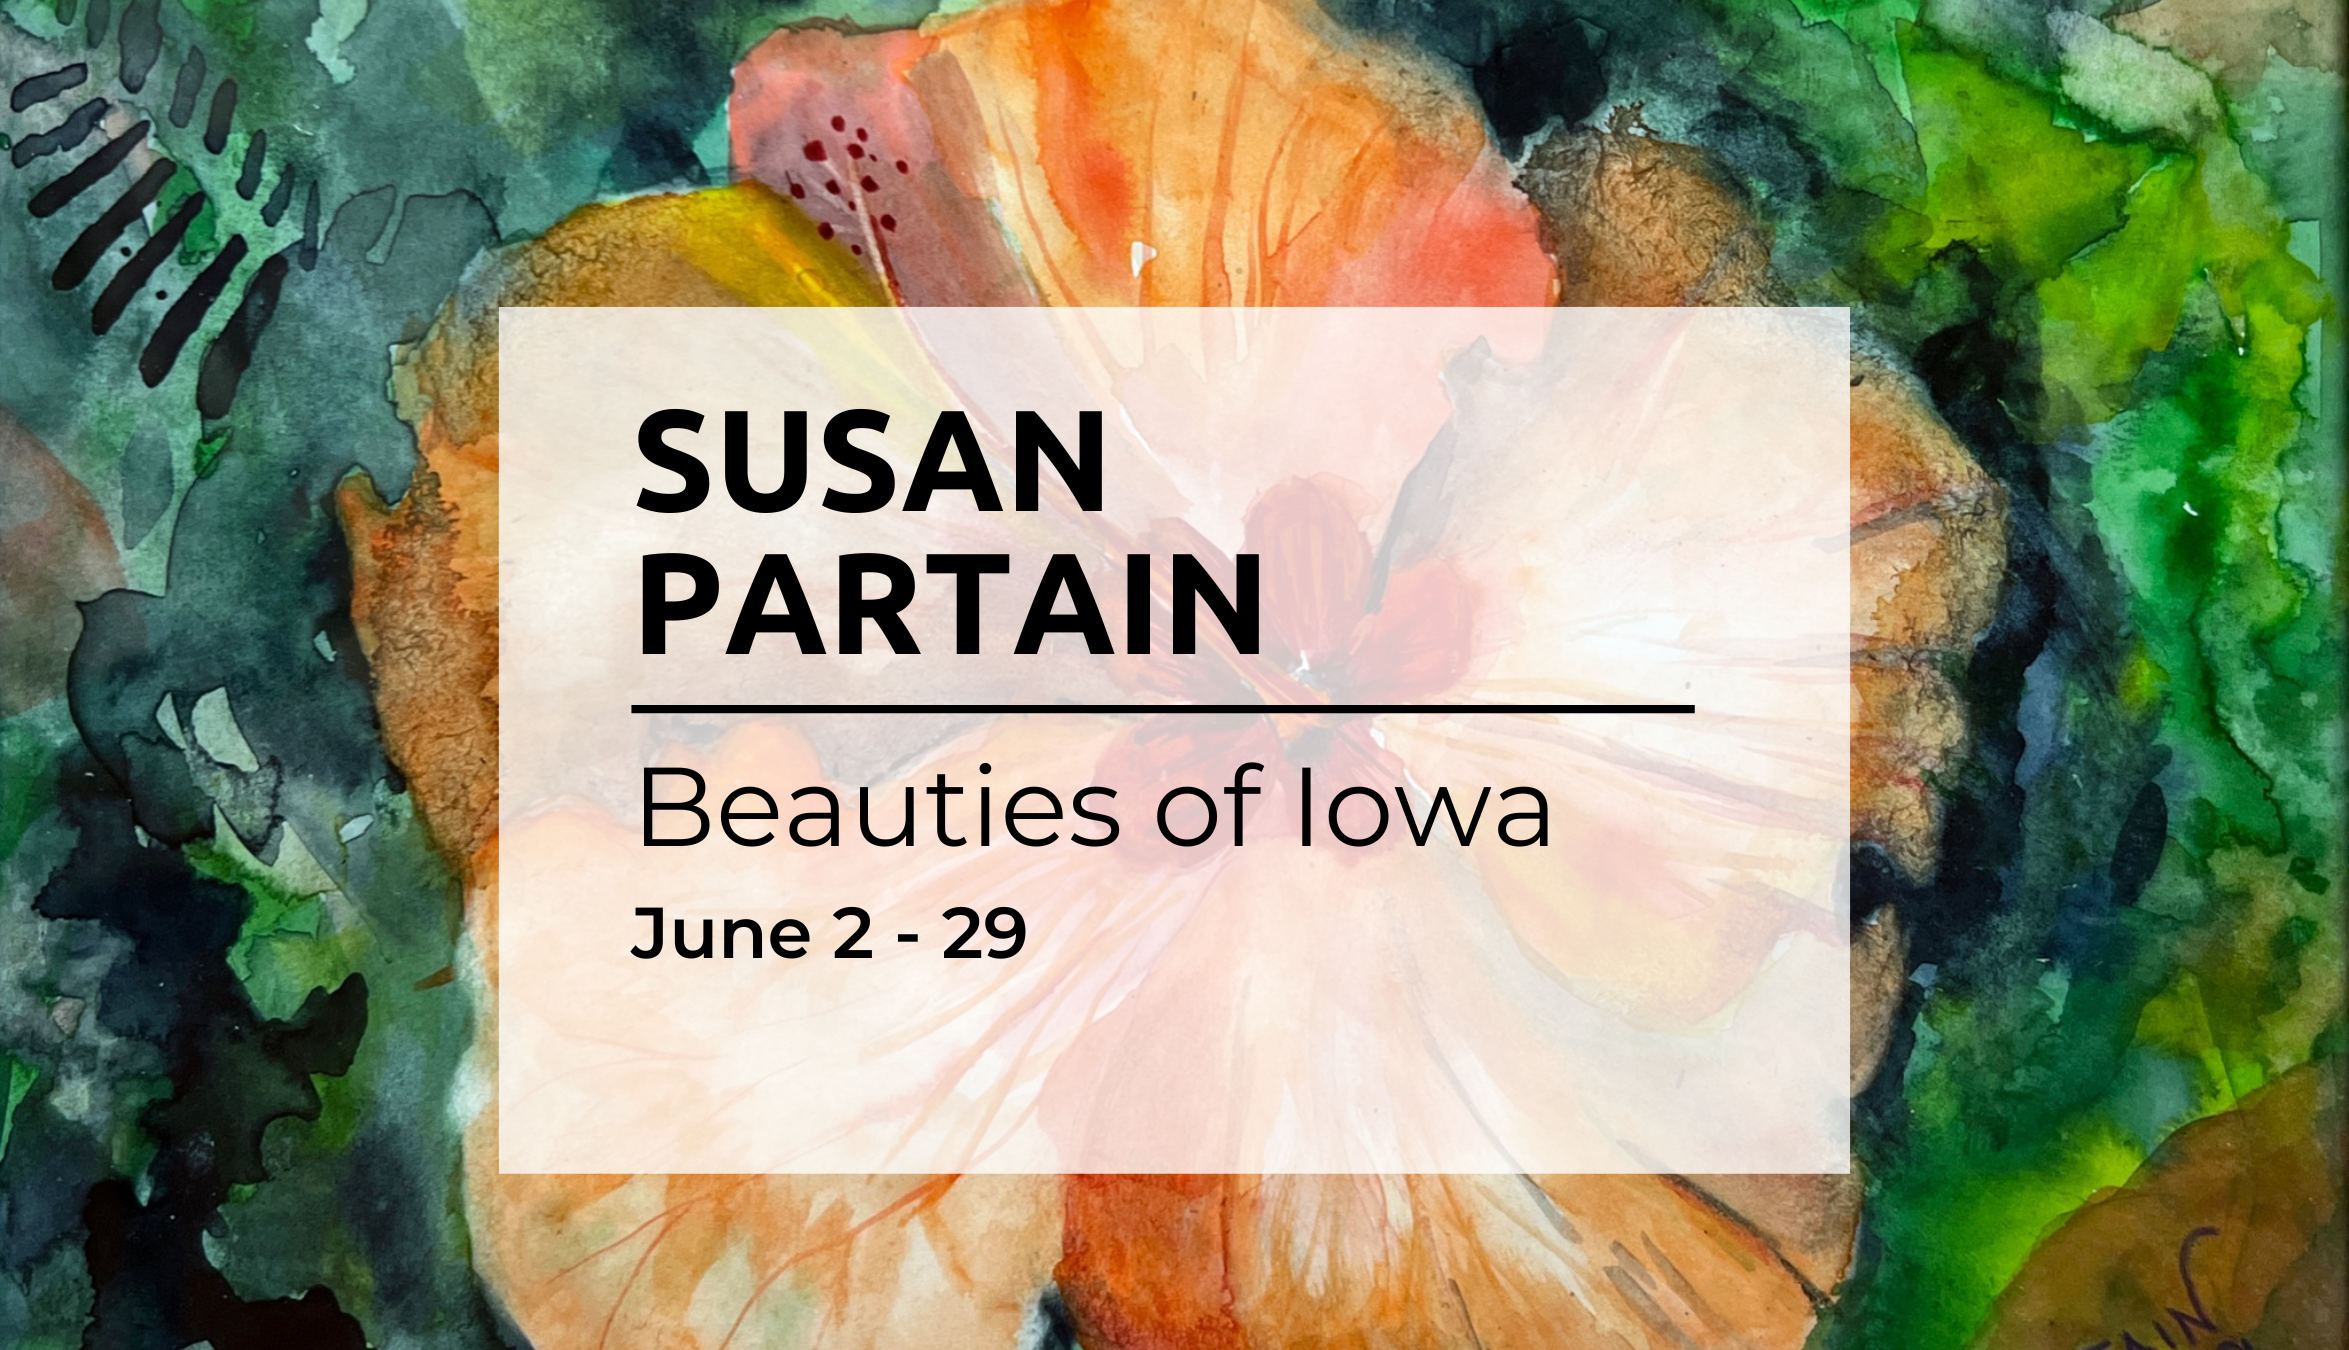 On Exhibit: "Beauties of Iowa"